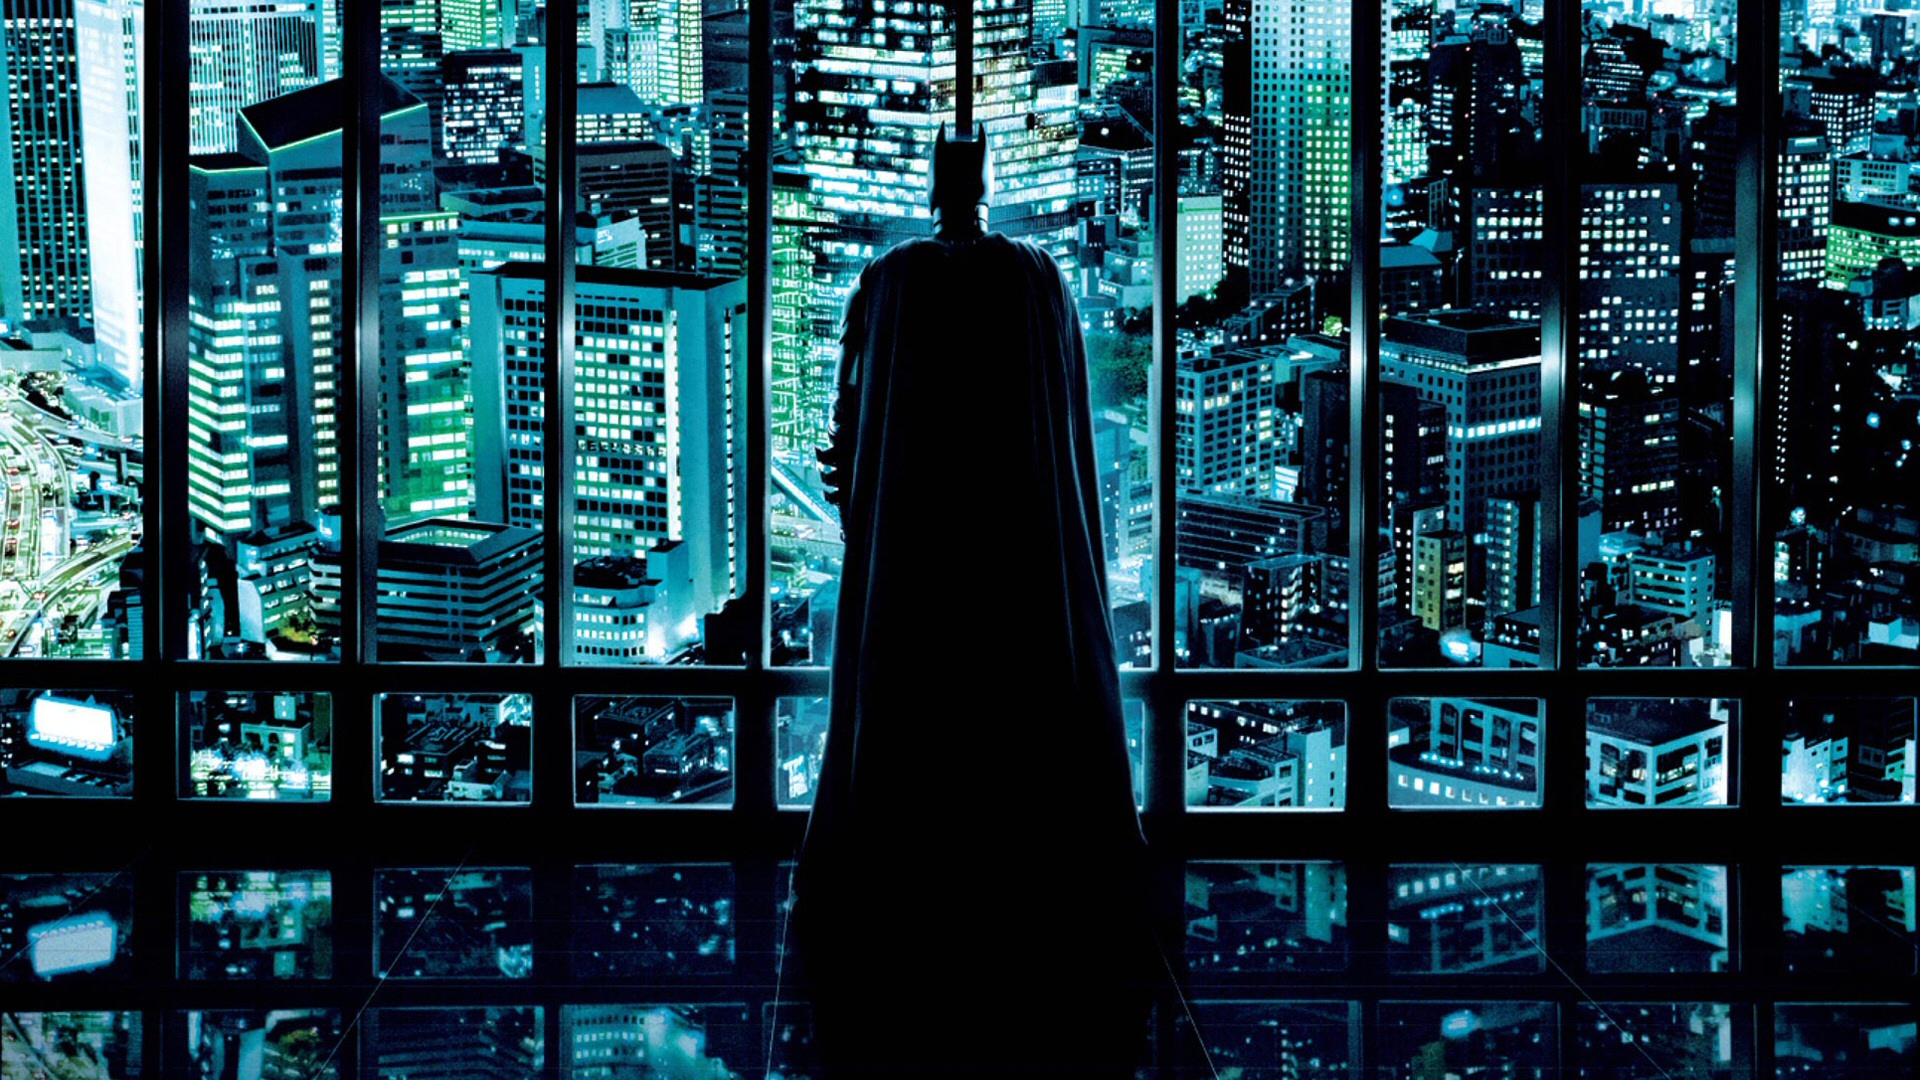 Gotham City Batman Wallpapers - Windows 10 Wallpapers